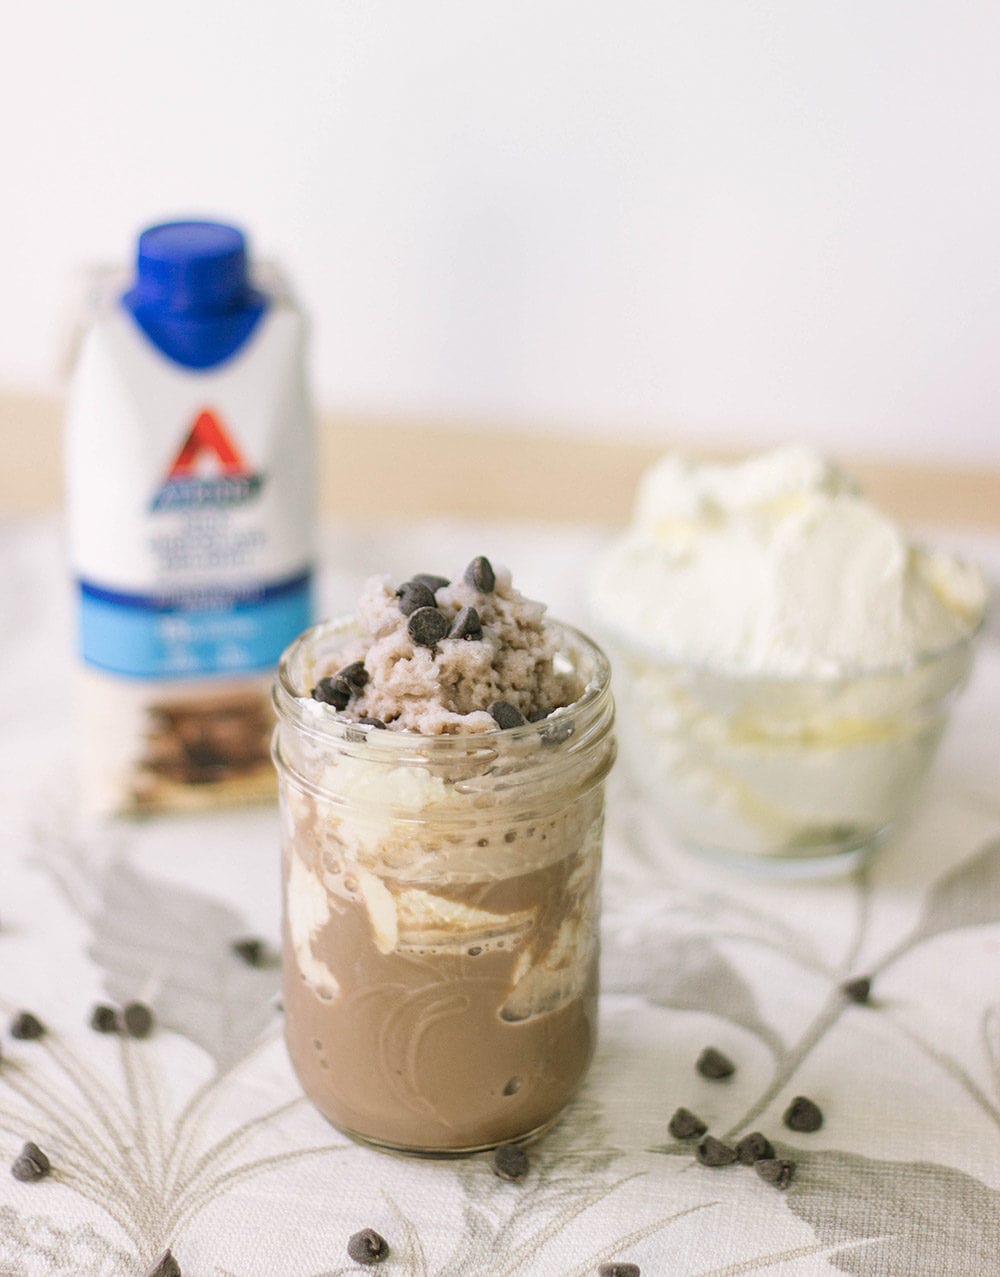 Atkins shake, whipped cream, and jar of chocolate shake.